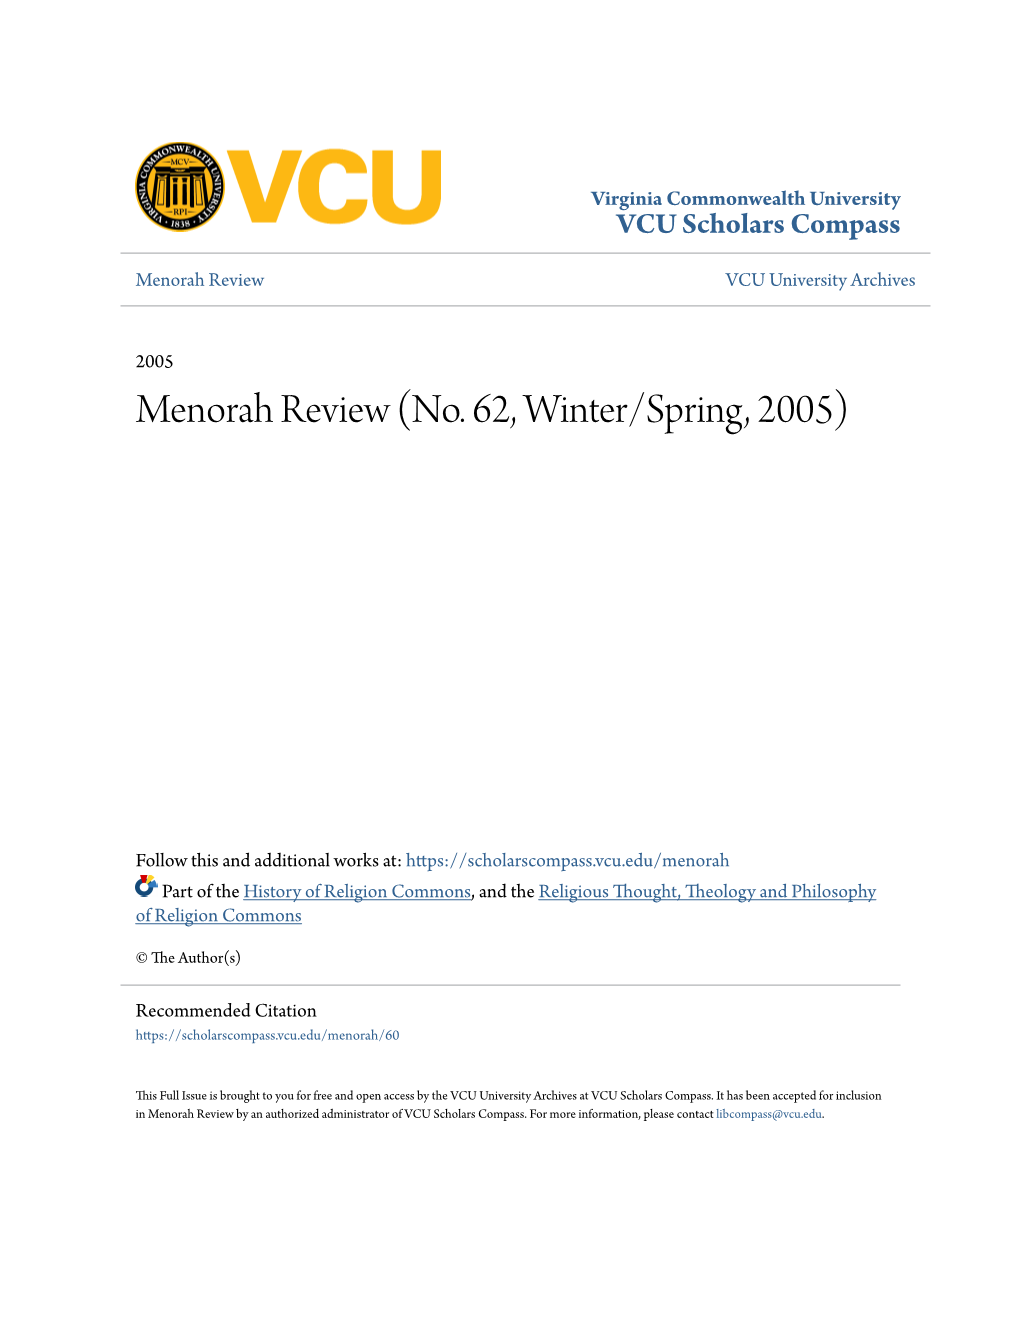 Menorah Review (No. 62, Winter/Spring, 2005)